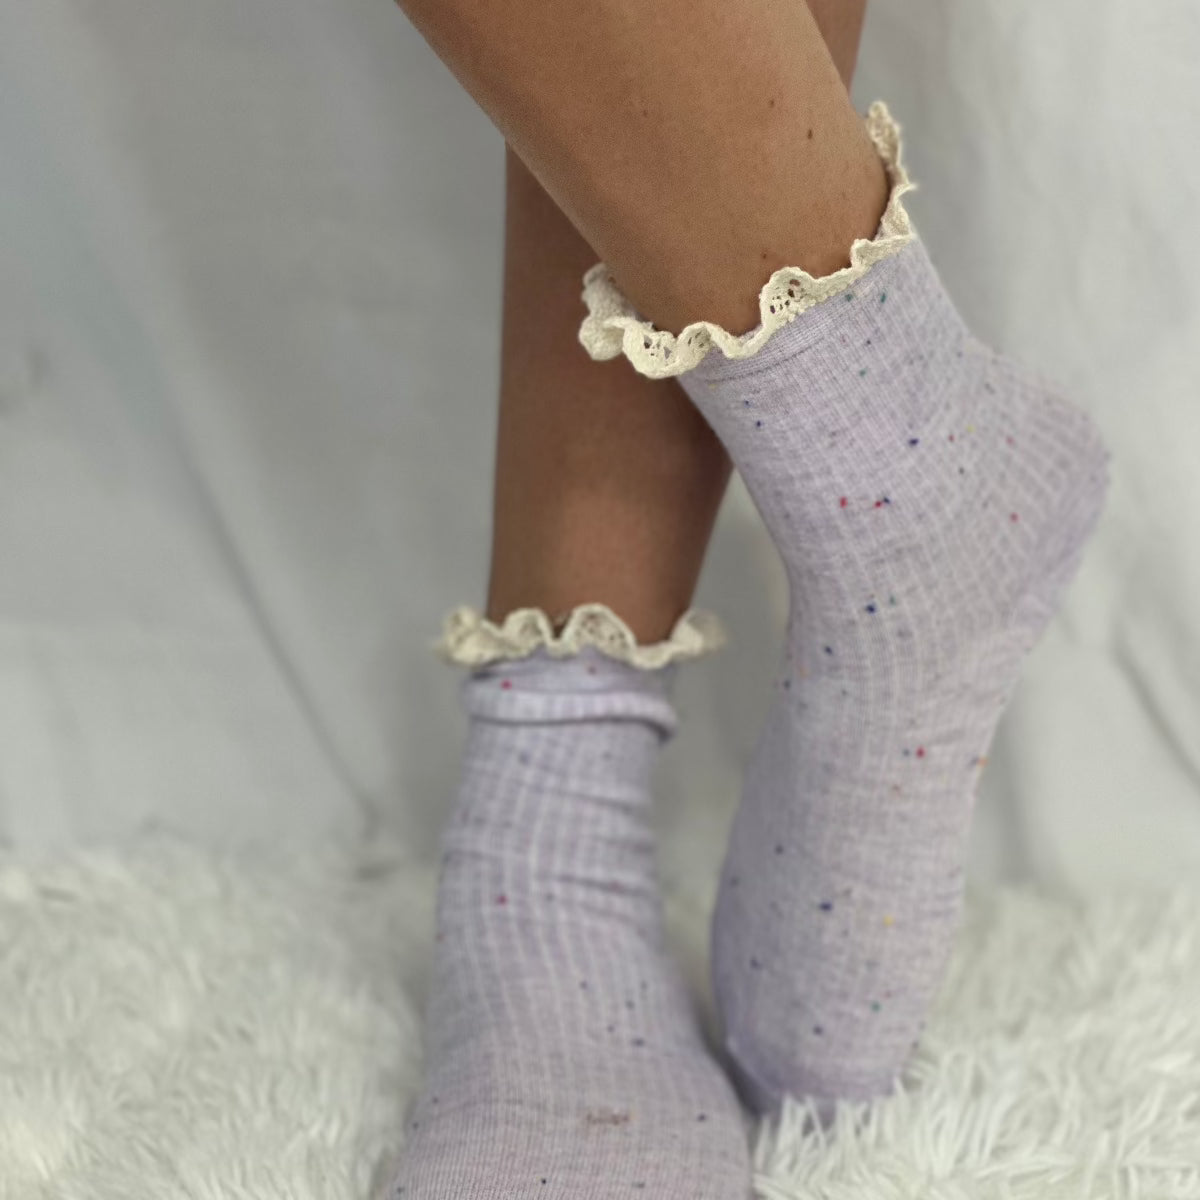 CONFETTI lace topped ankle socks - lavender, cute summer lace topped sneaker socks women